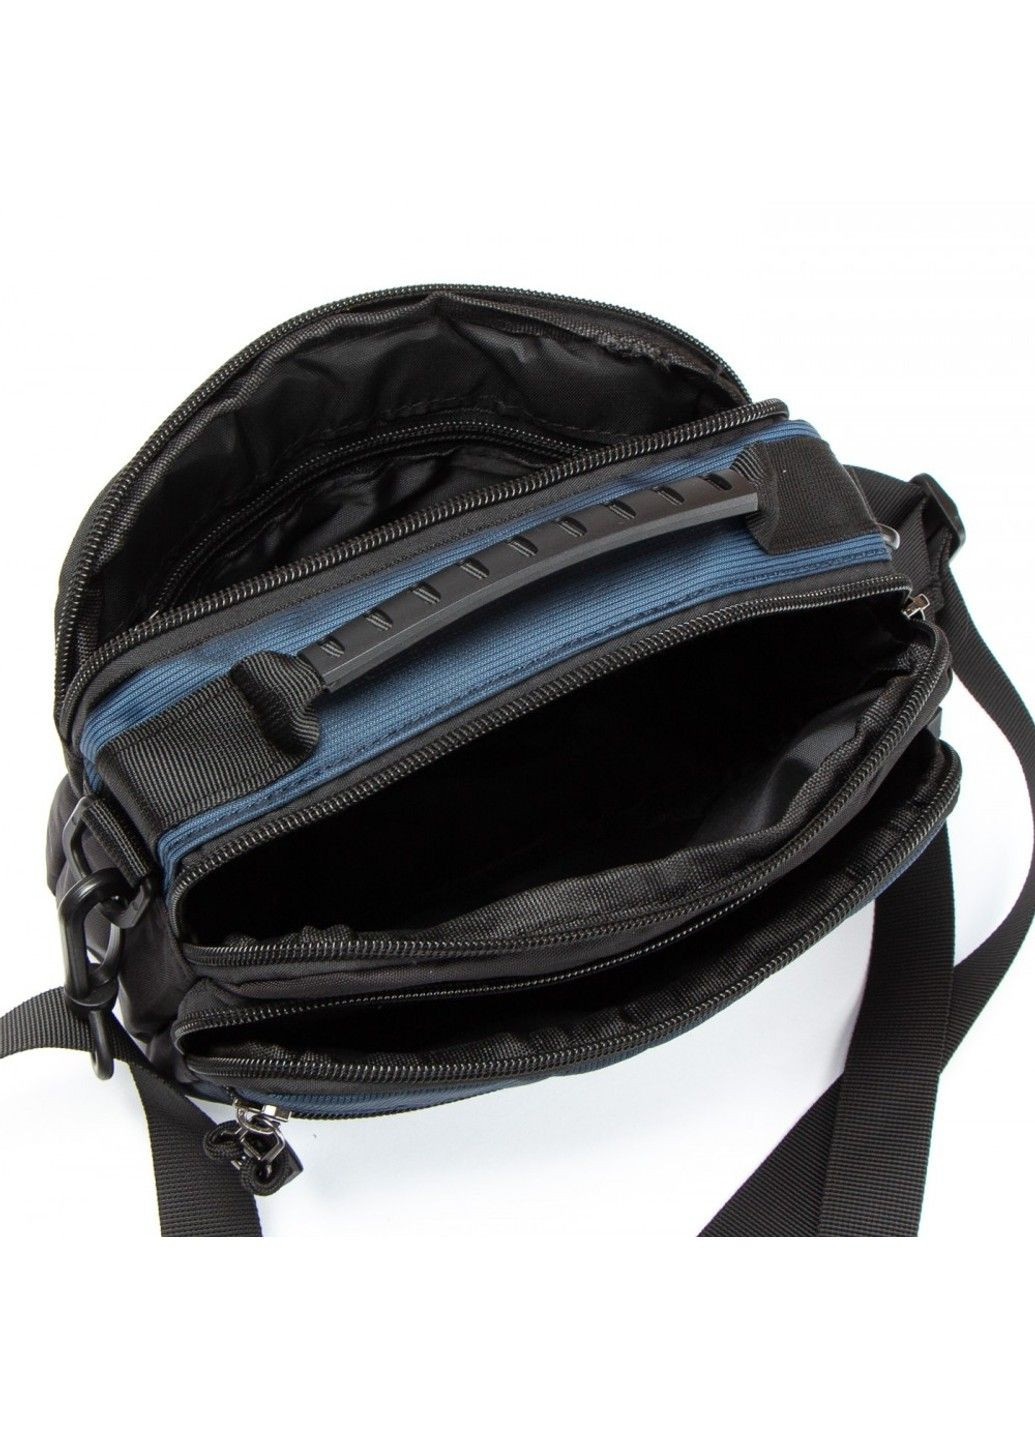 Мужская тканевая сумка через плечо 82051 blue Lanpad (284667897)